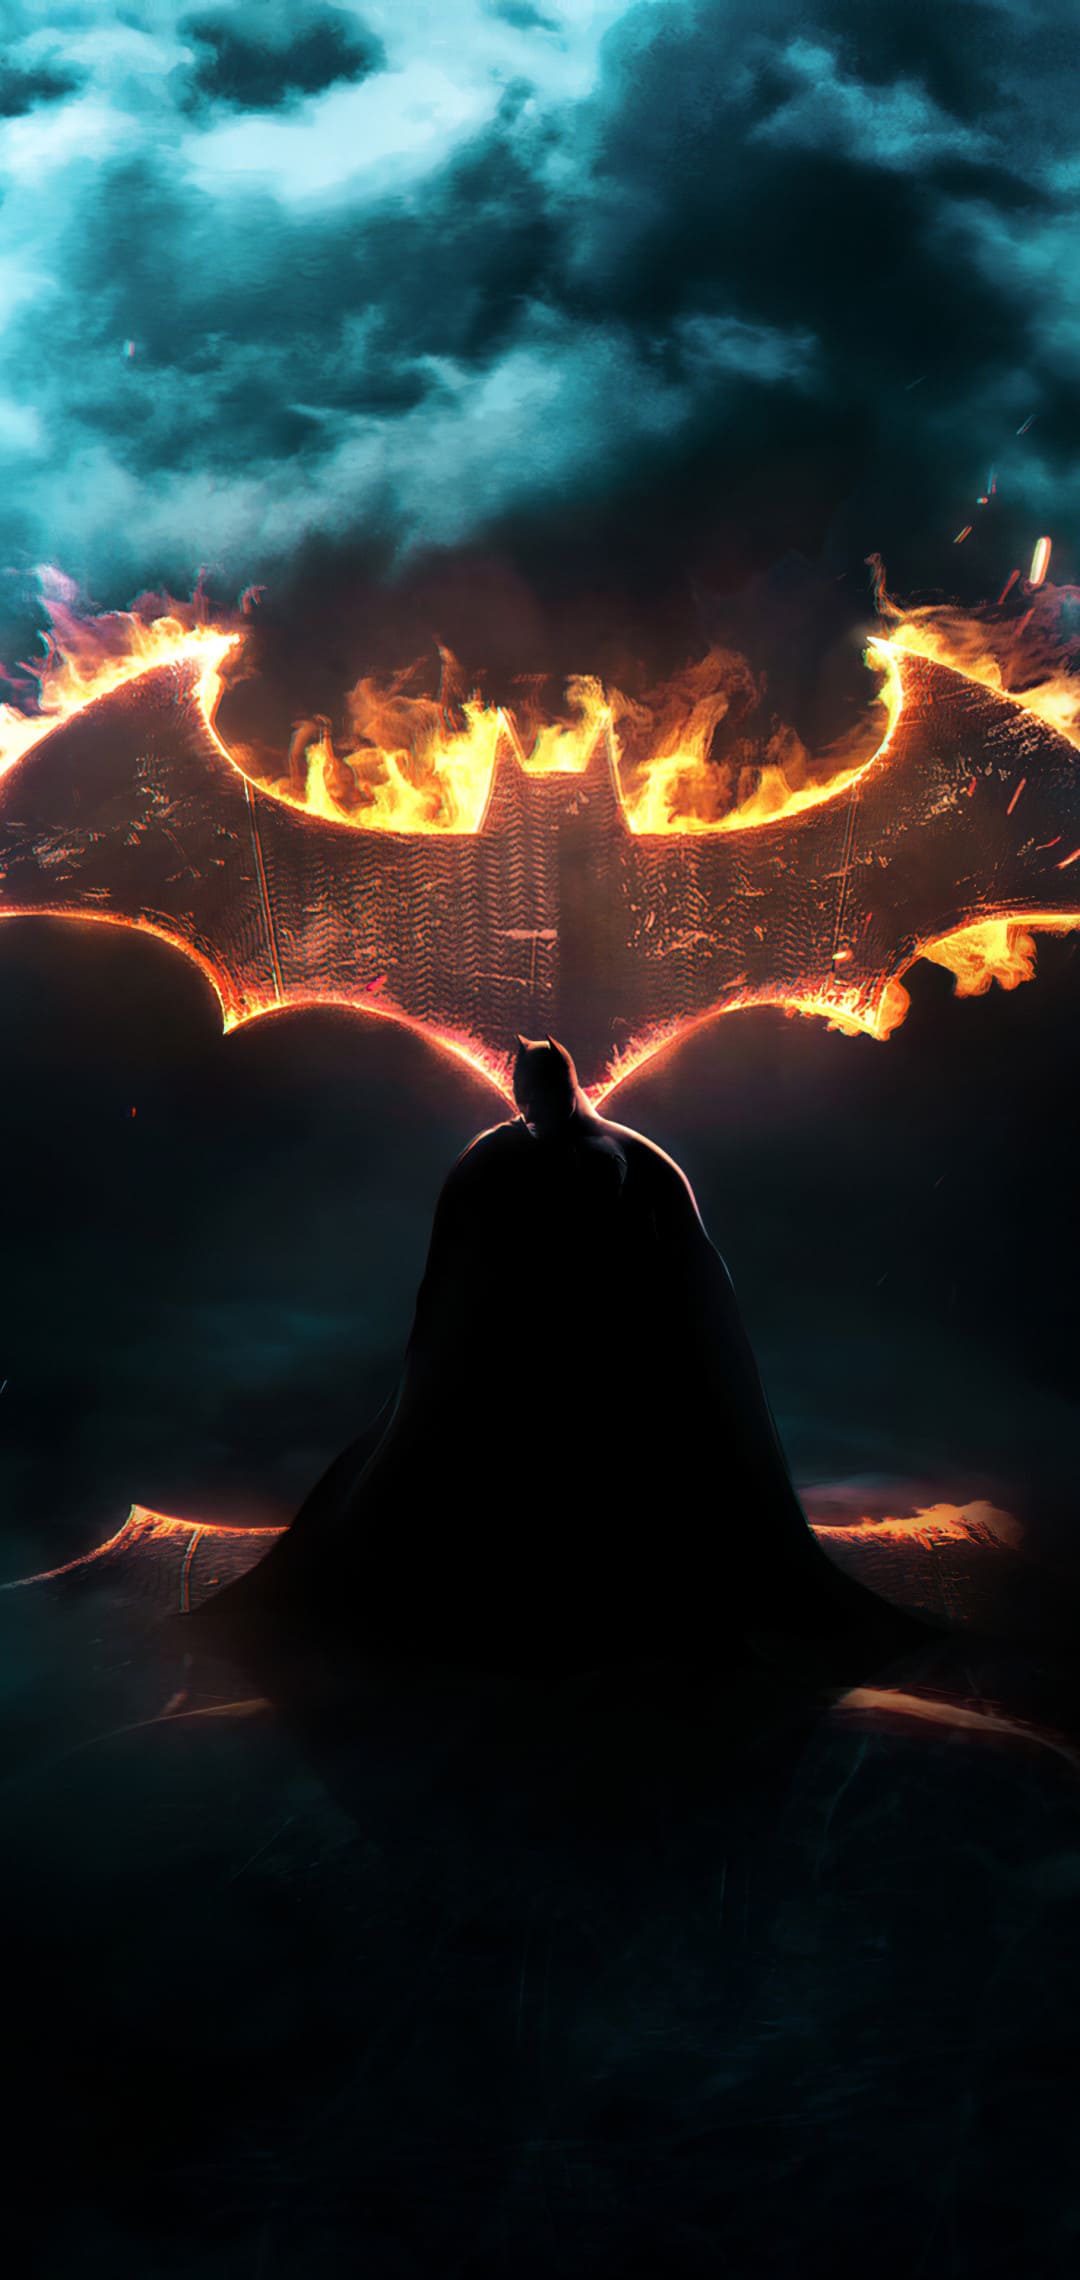 Batman Wallpaper Best Free Batman Photo & Image Download